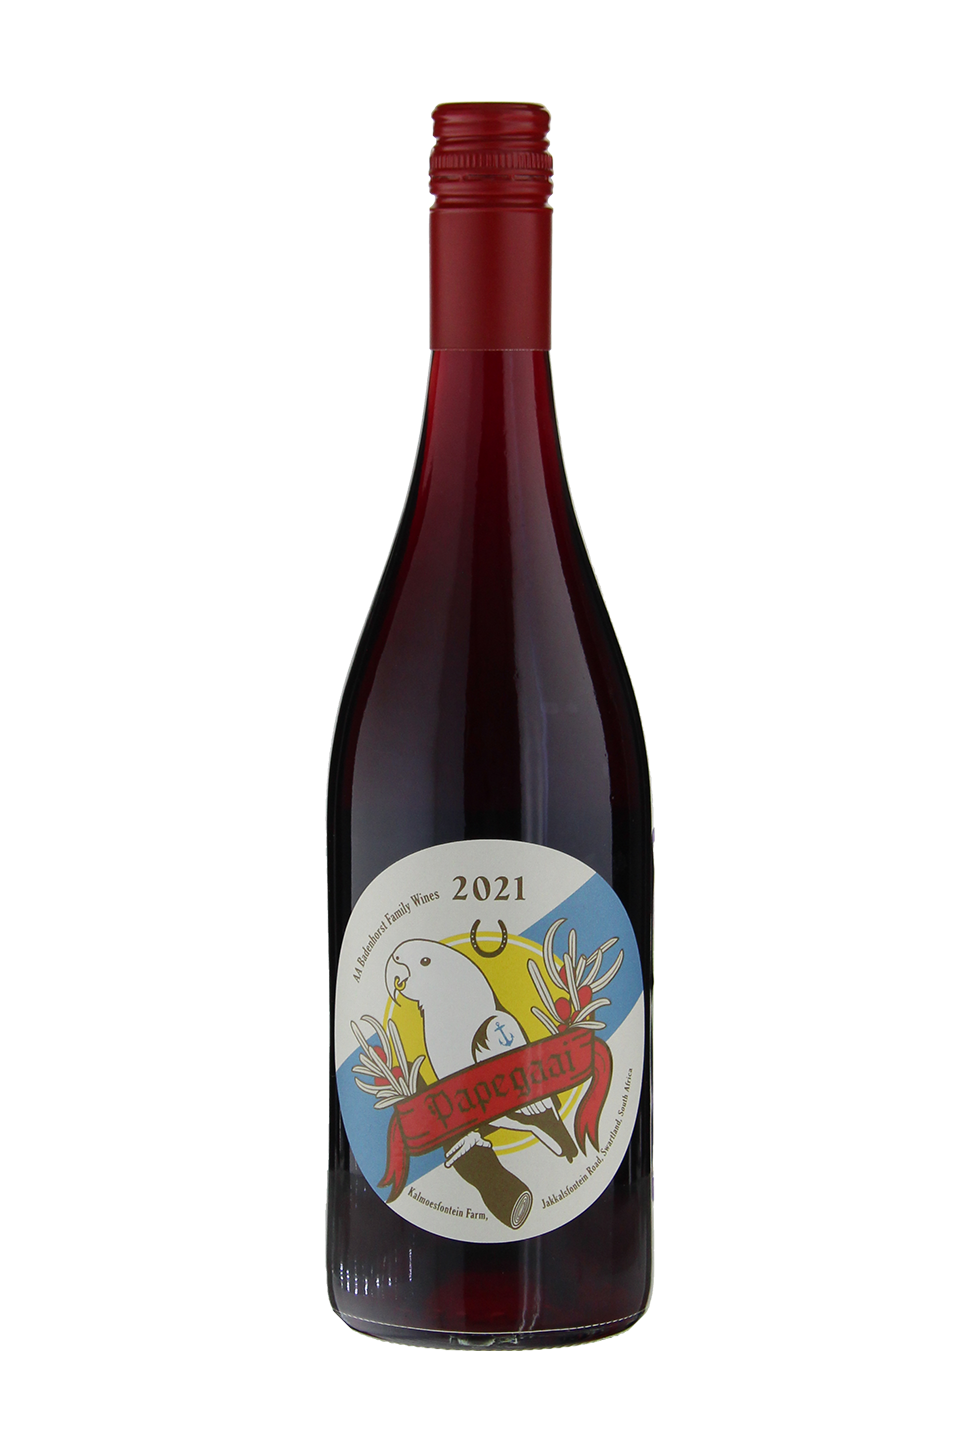 AA Badenhorst Family Wines Papegaai Red Blend Swartland WO